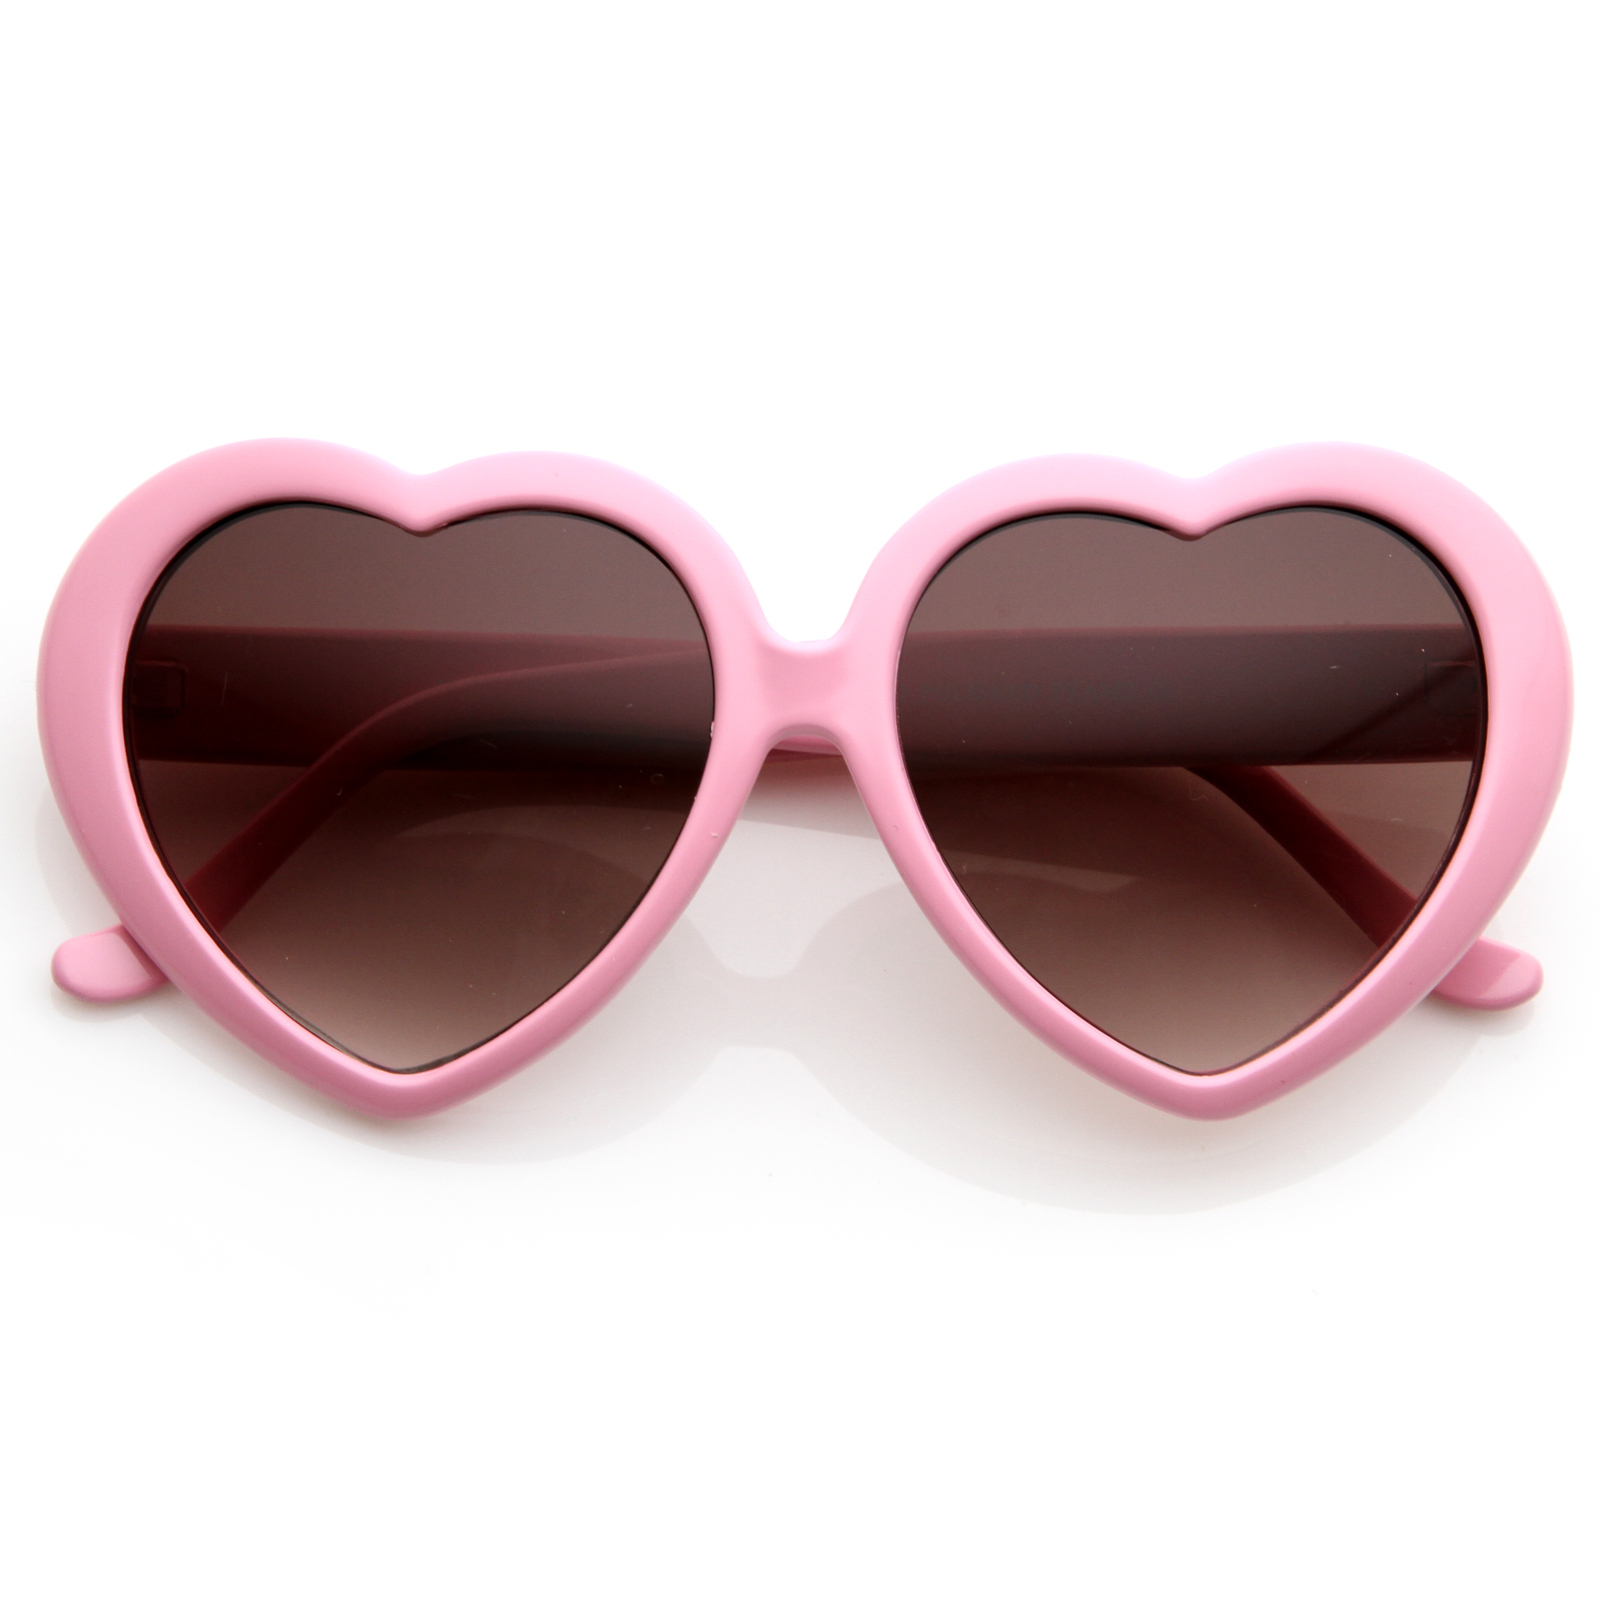 Large Oversized Womens Heart Shaped Sunglasses Cute Love Fashion Eyewear - 8182 - Red